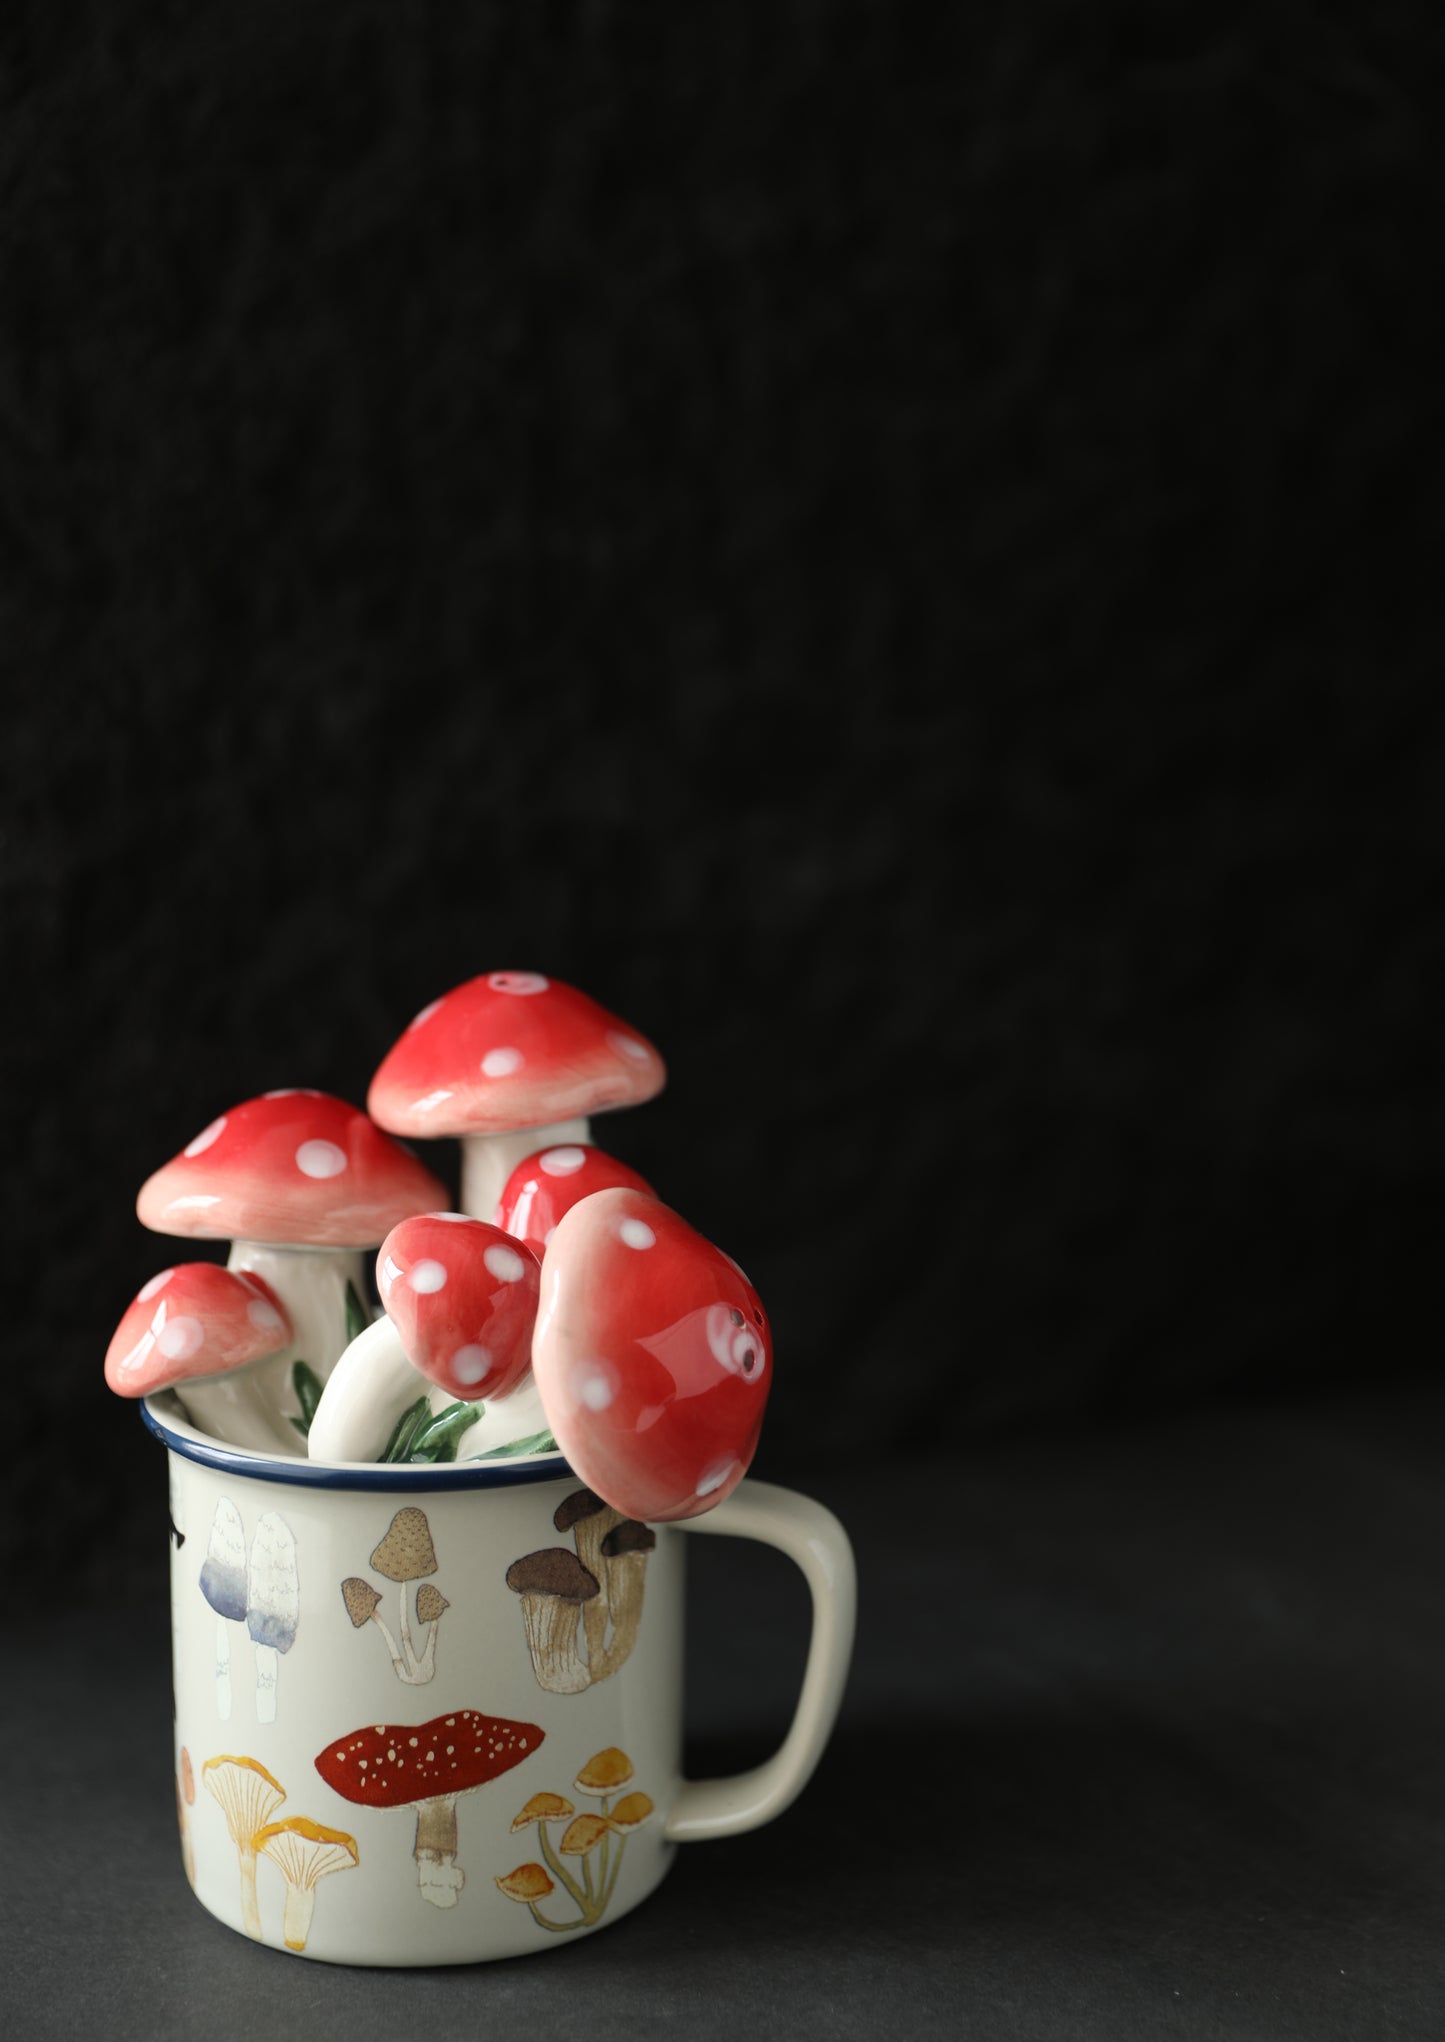  Psychedelic Mushroom Ceramic Mug 